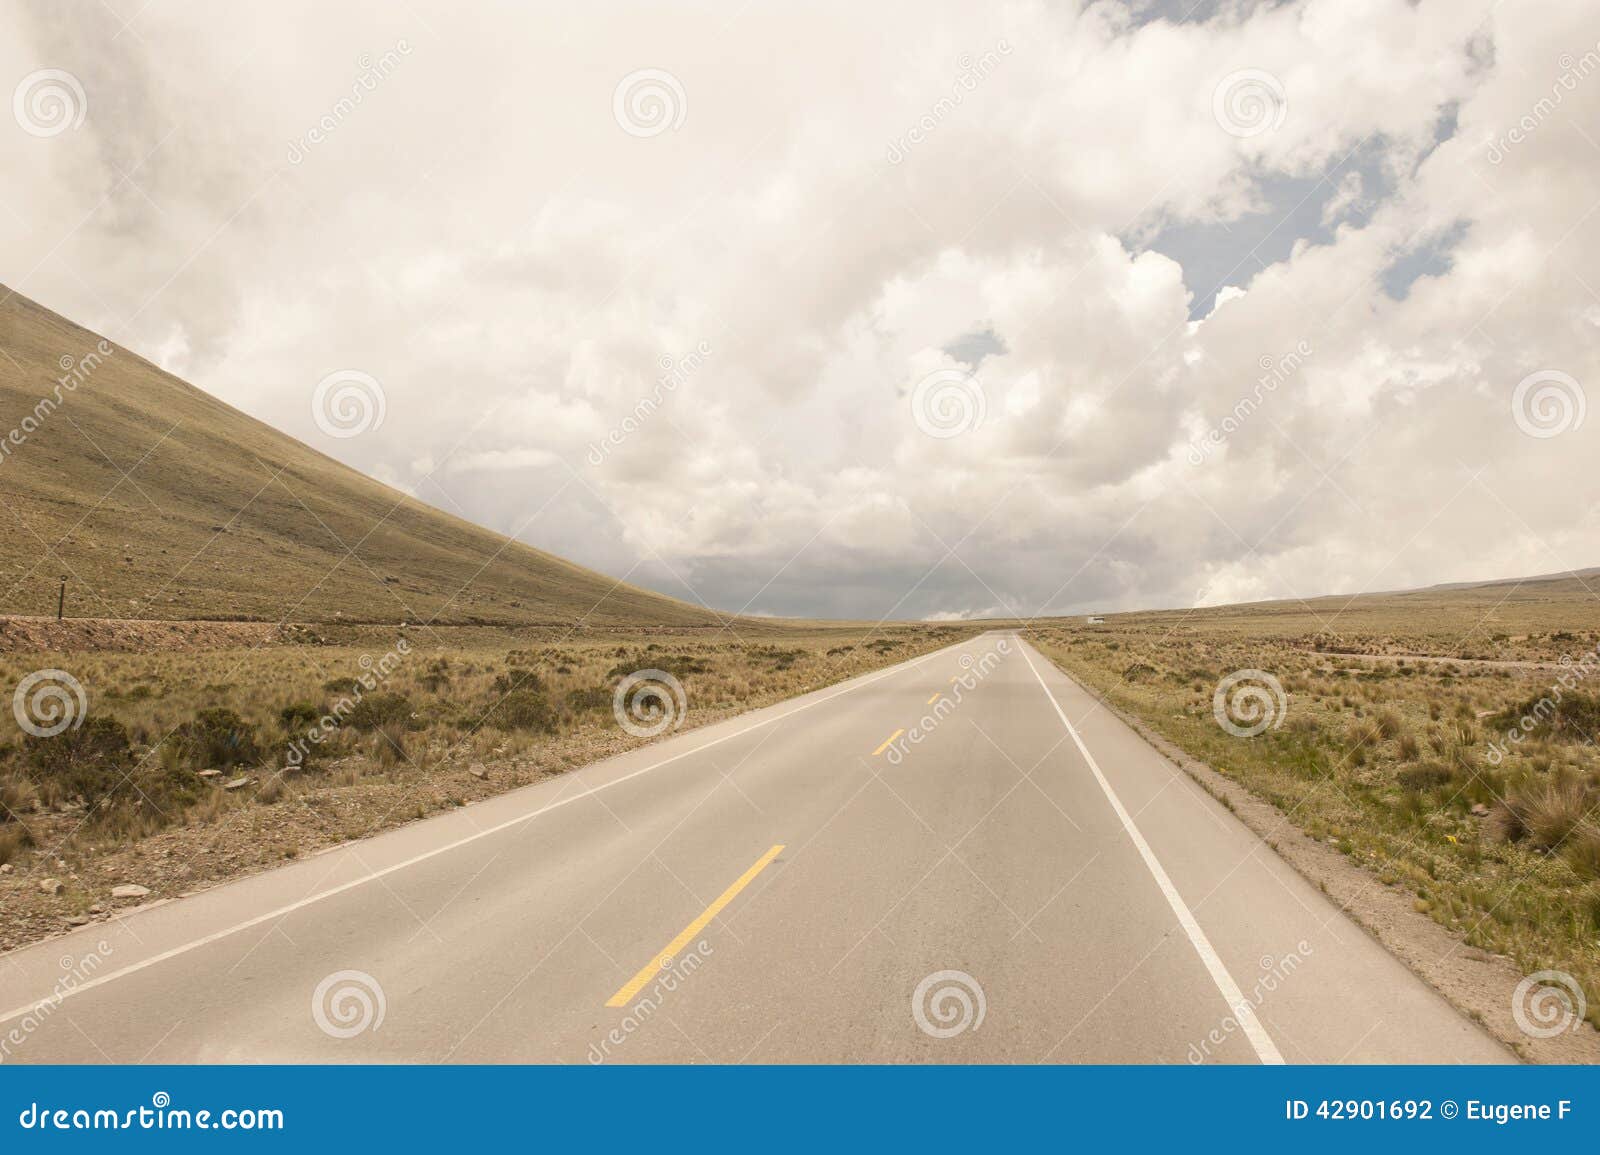 peruvian roadway